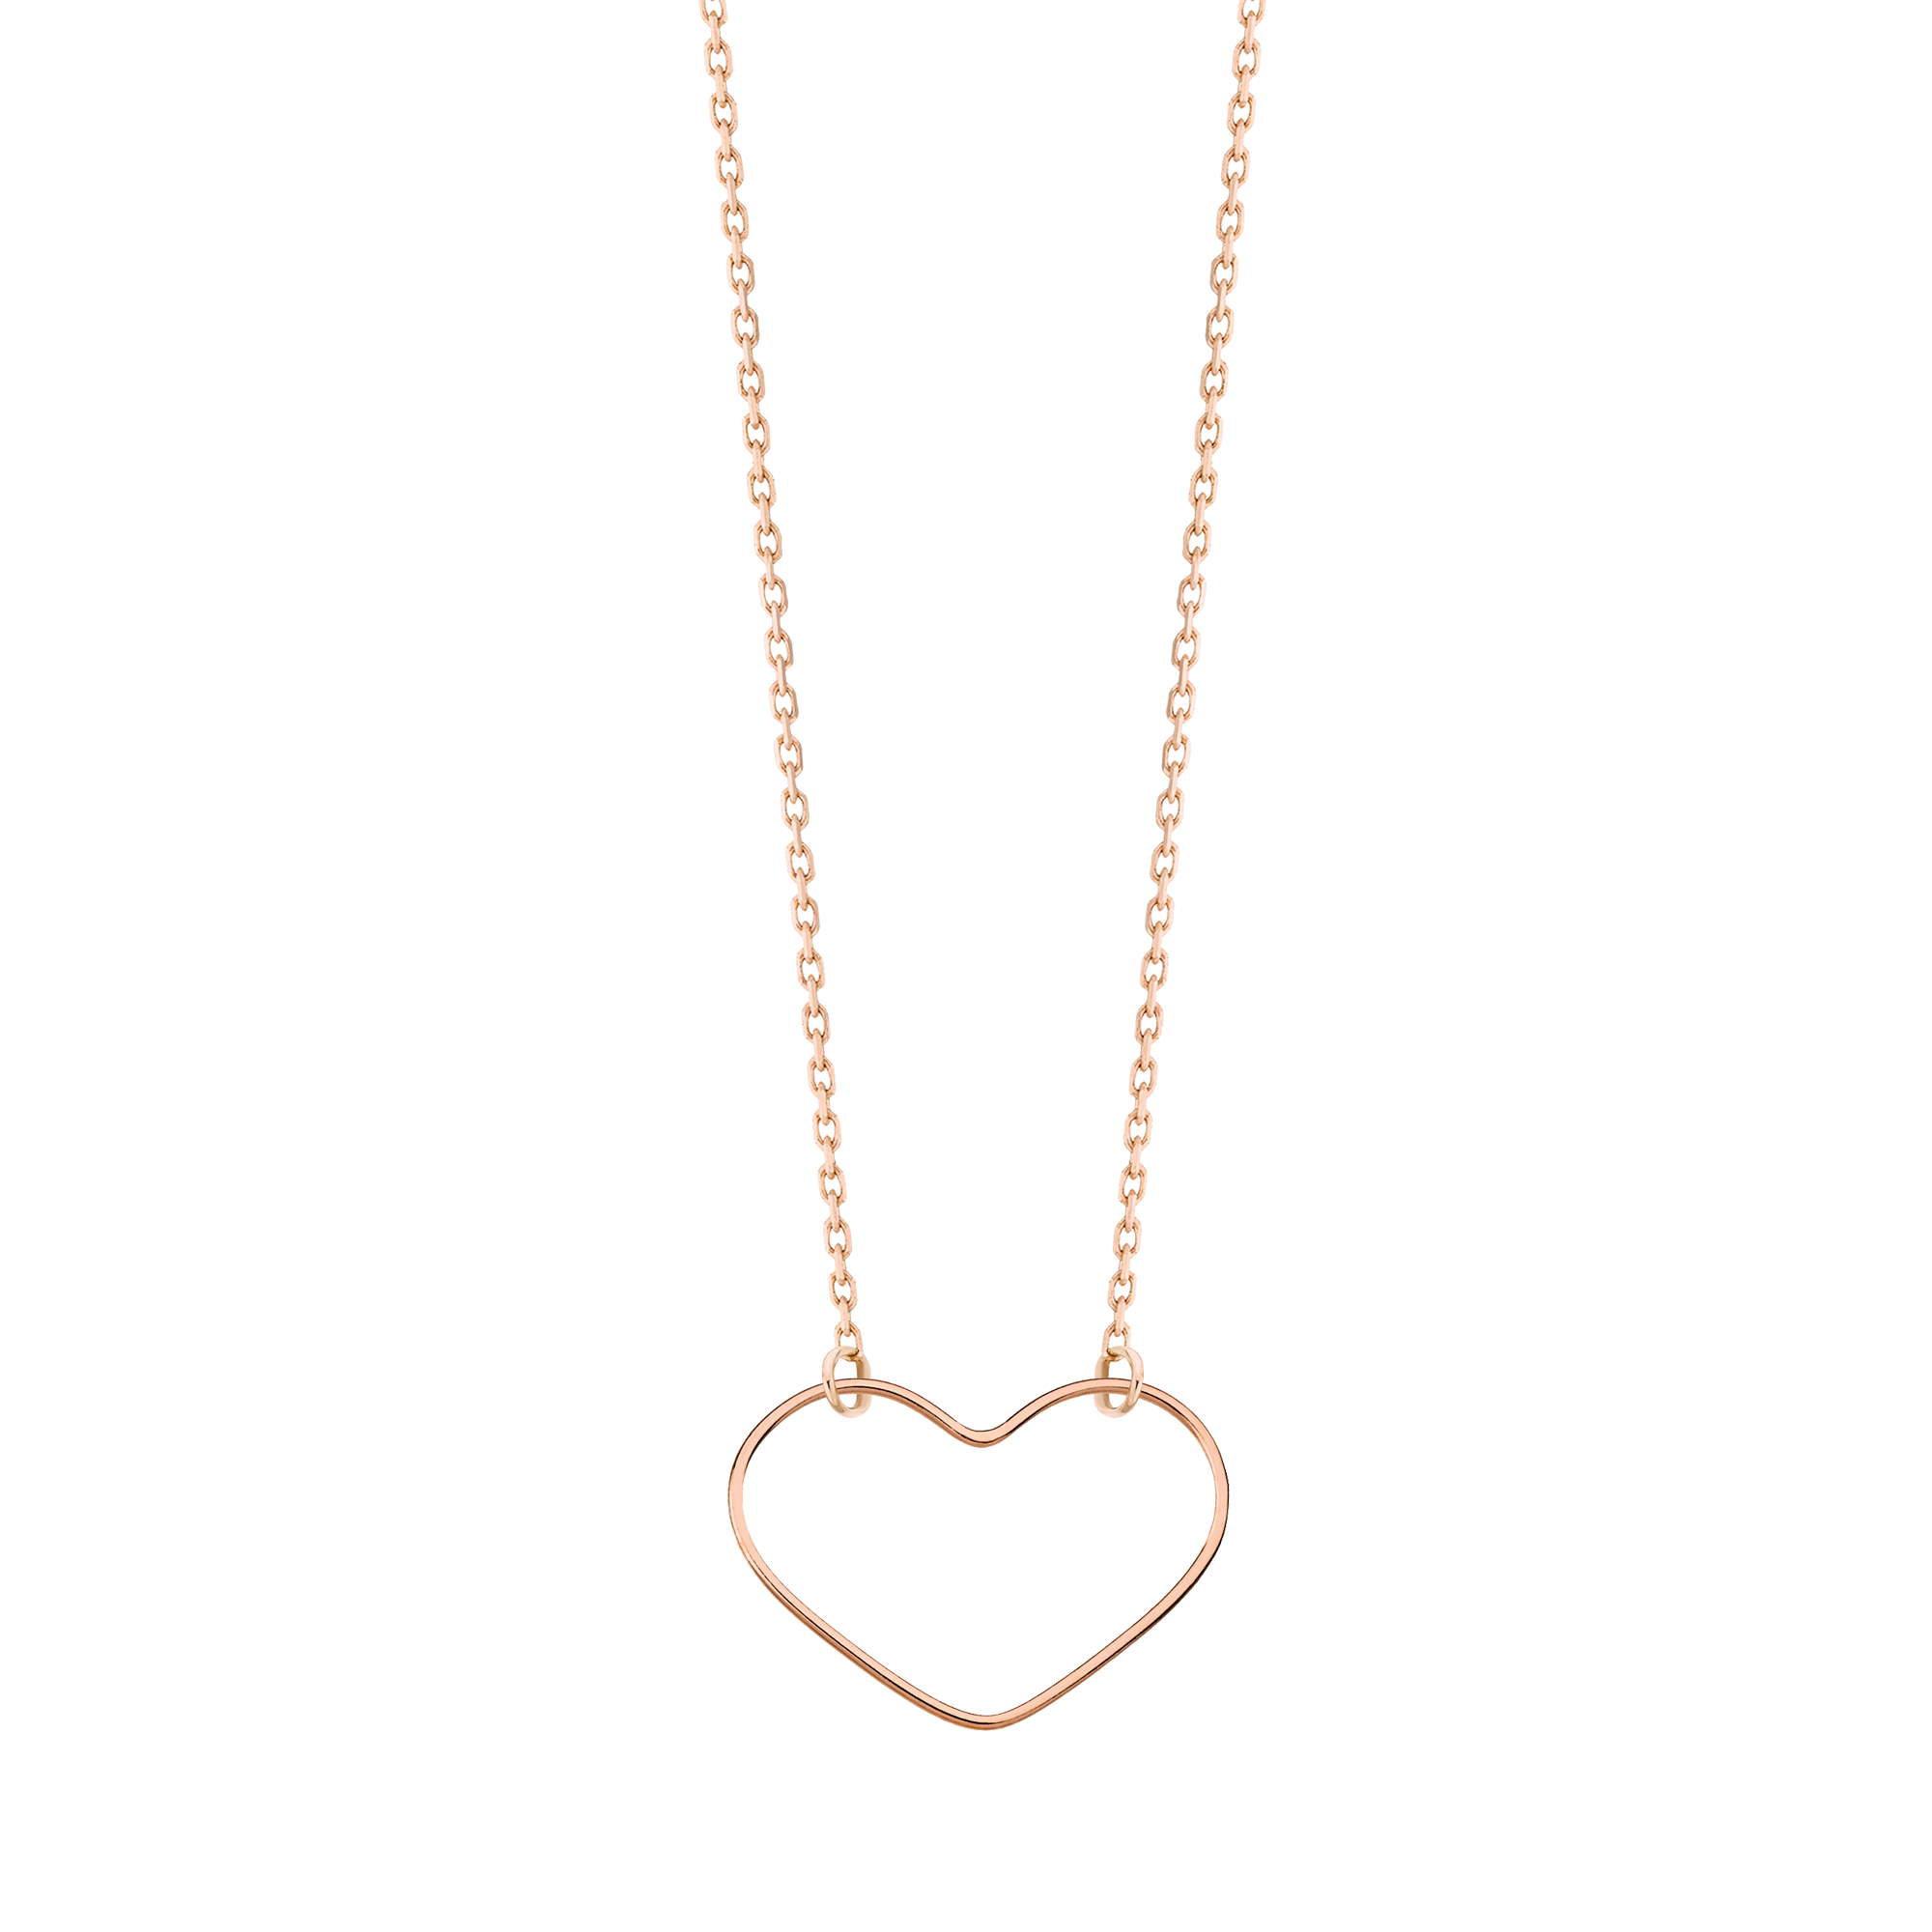 Lyst - Vanrycke Heart Outline Necklace In Pink Gold in Metallic